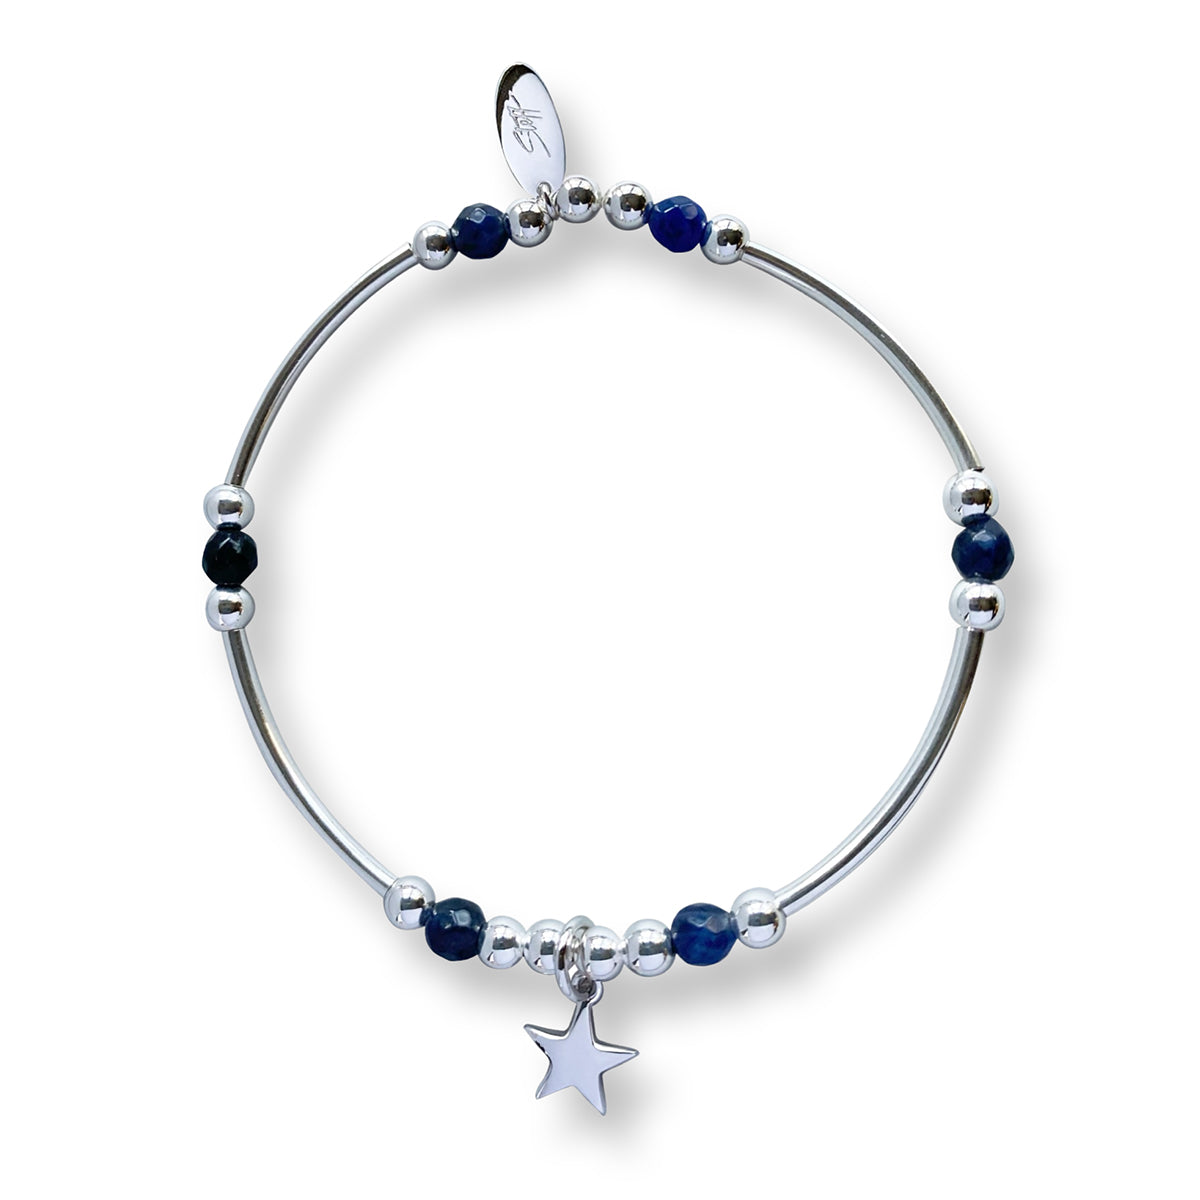 Steff Silver & Sodalite Celestial Bead Bracelet with Star Charm